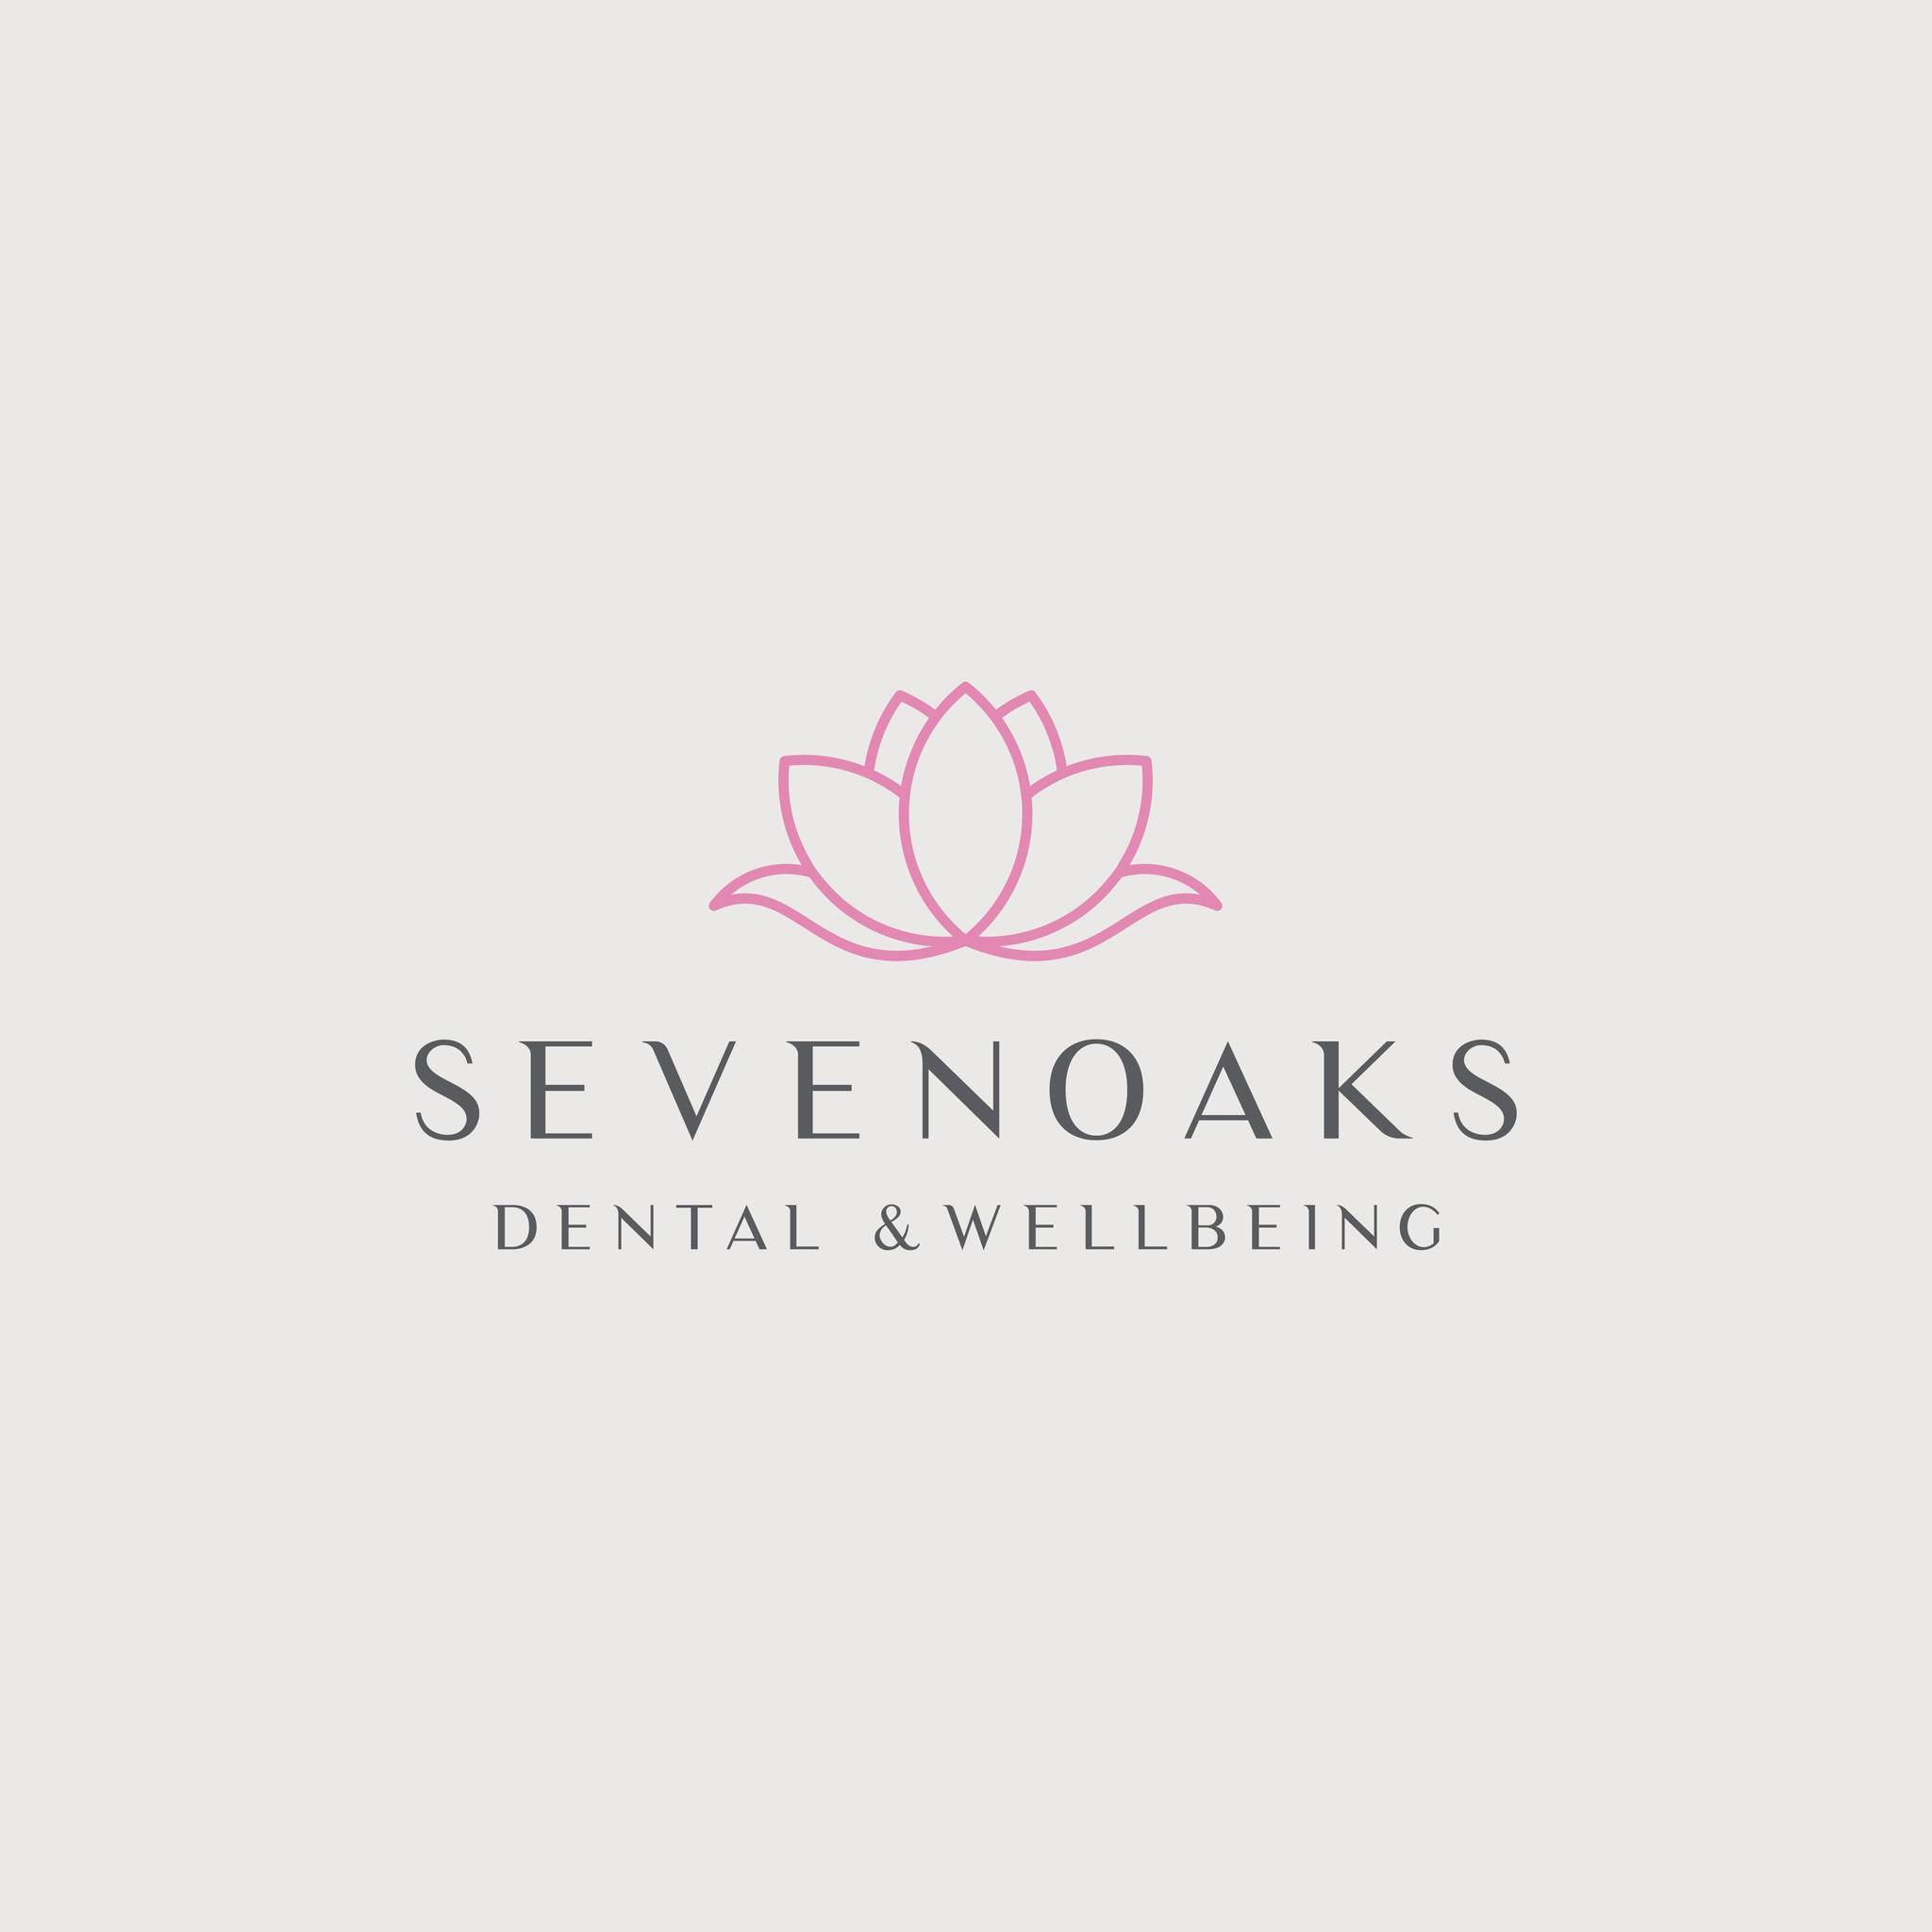 SEVENOAKS DENTAL & WELLBEING logo